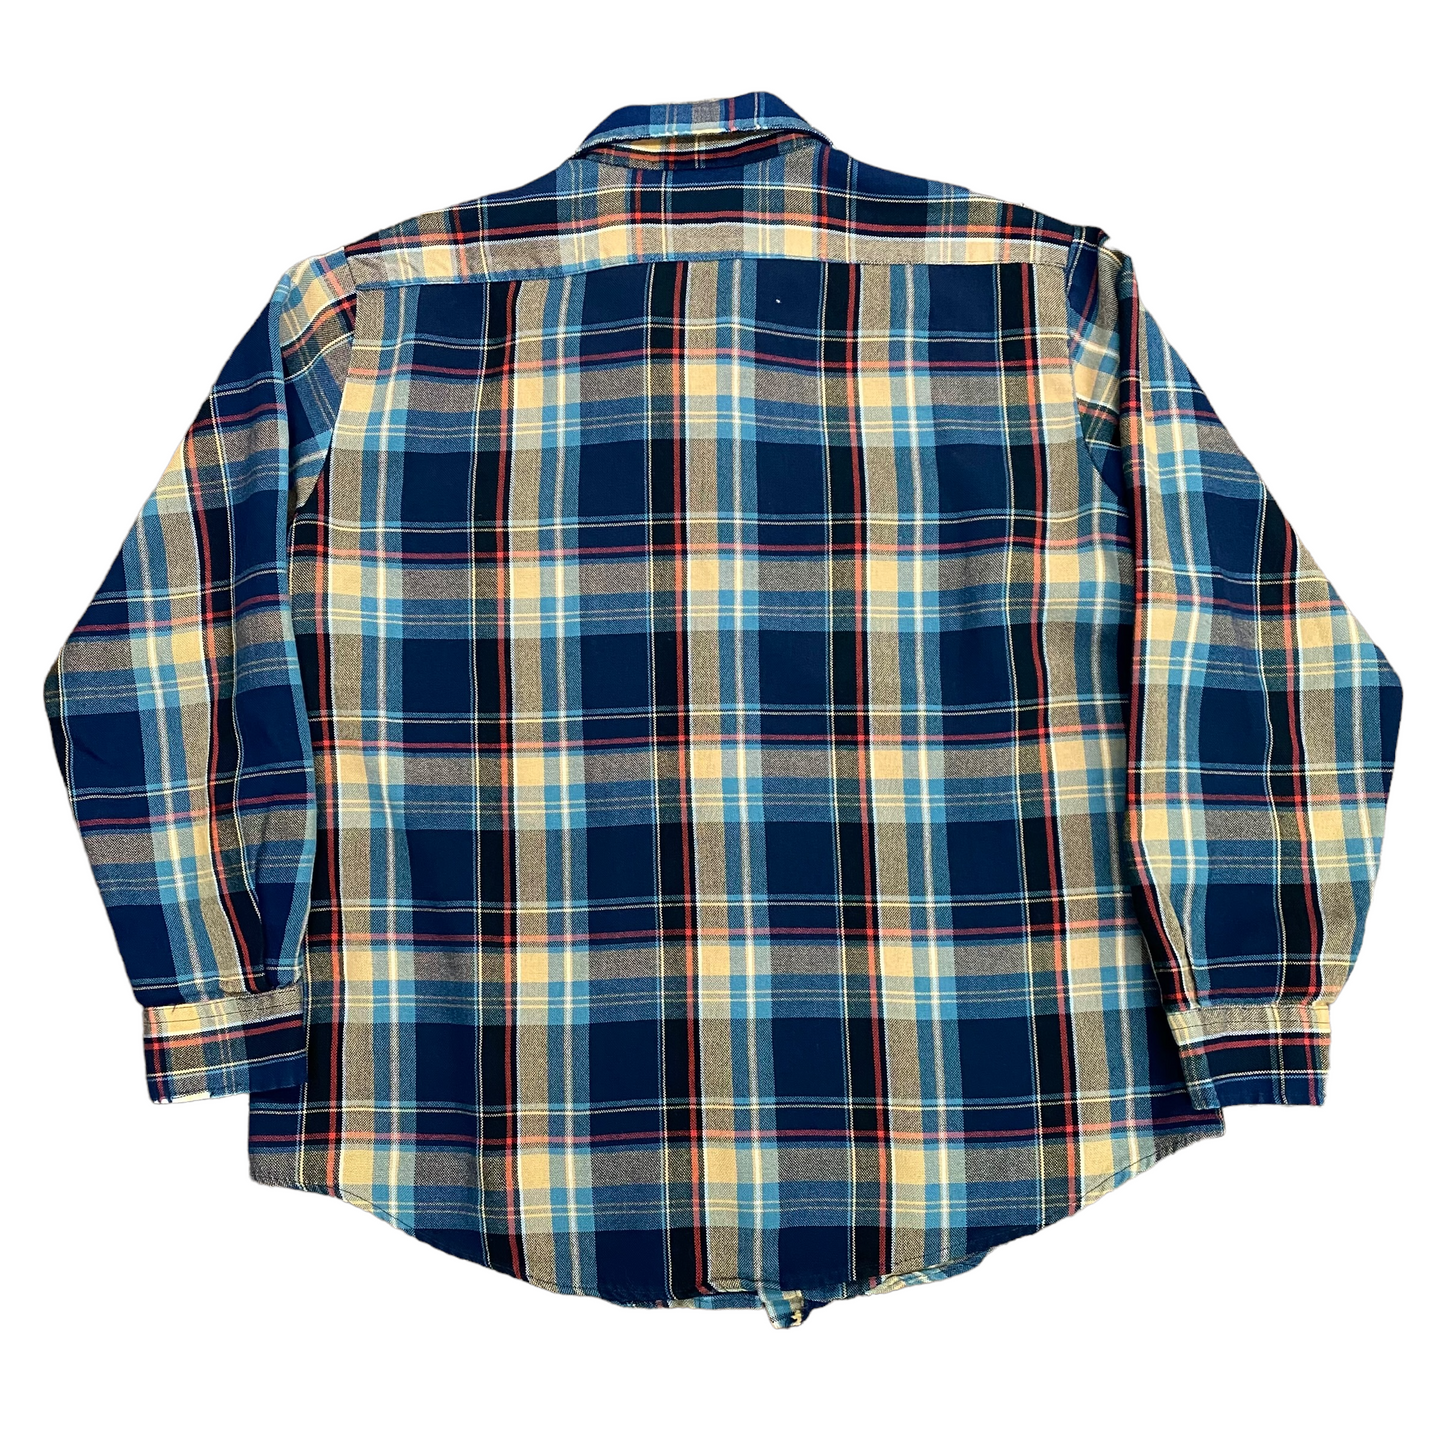 Vintage 80s Sears Blue Flannel Shirt - Size XL